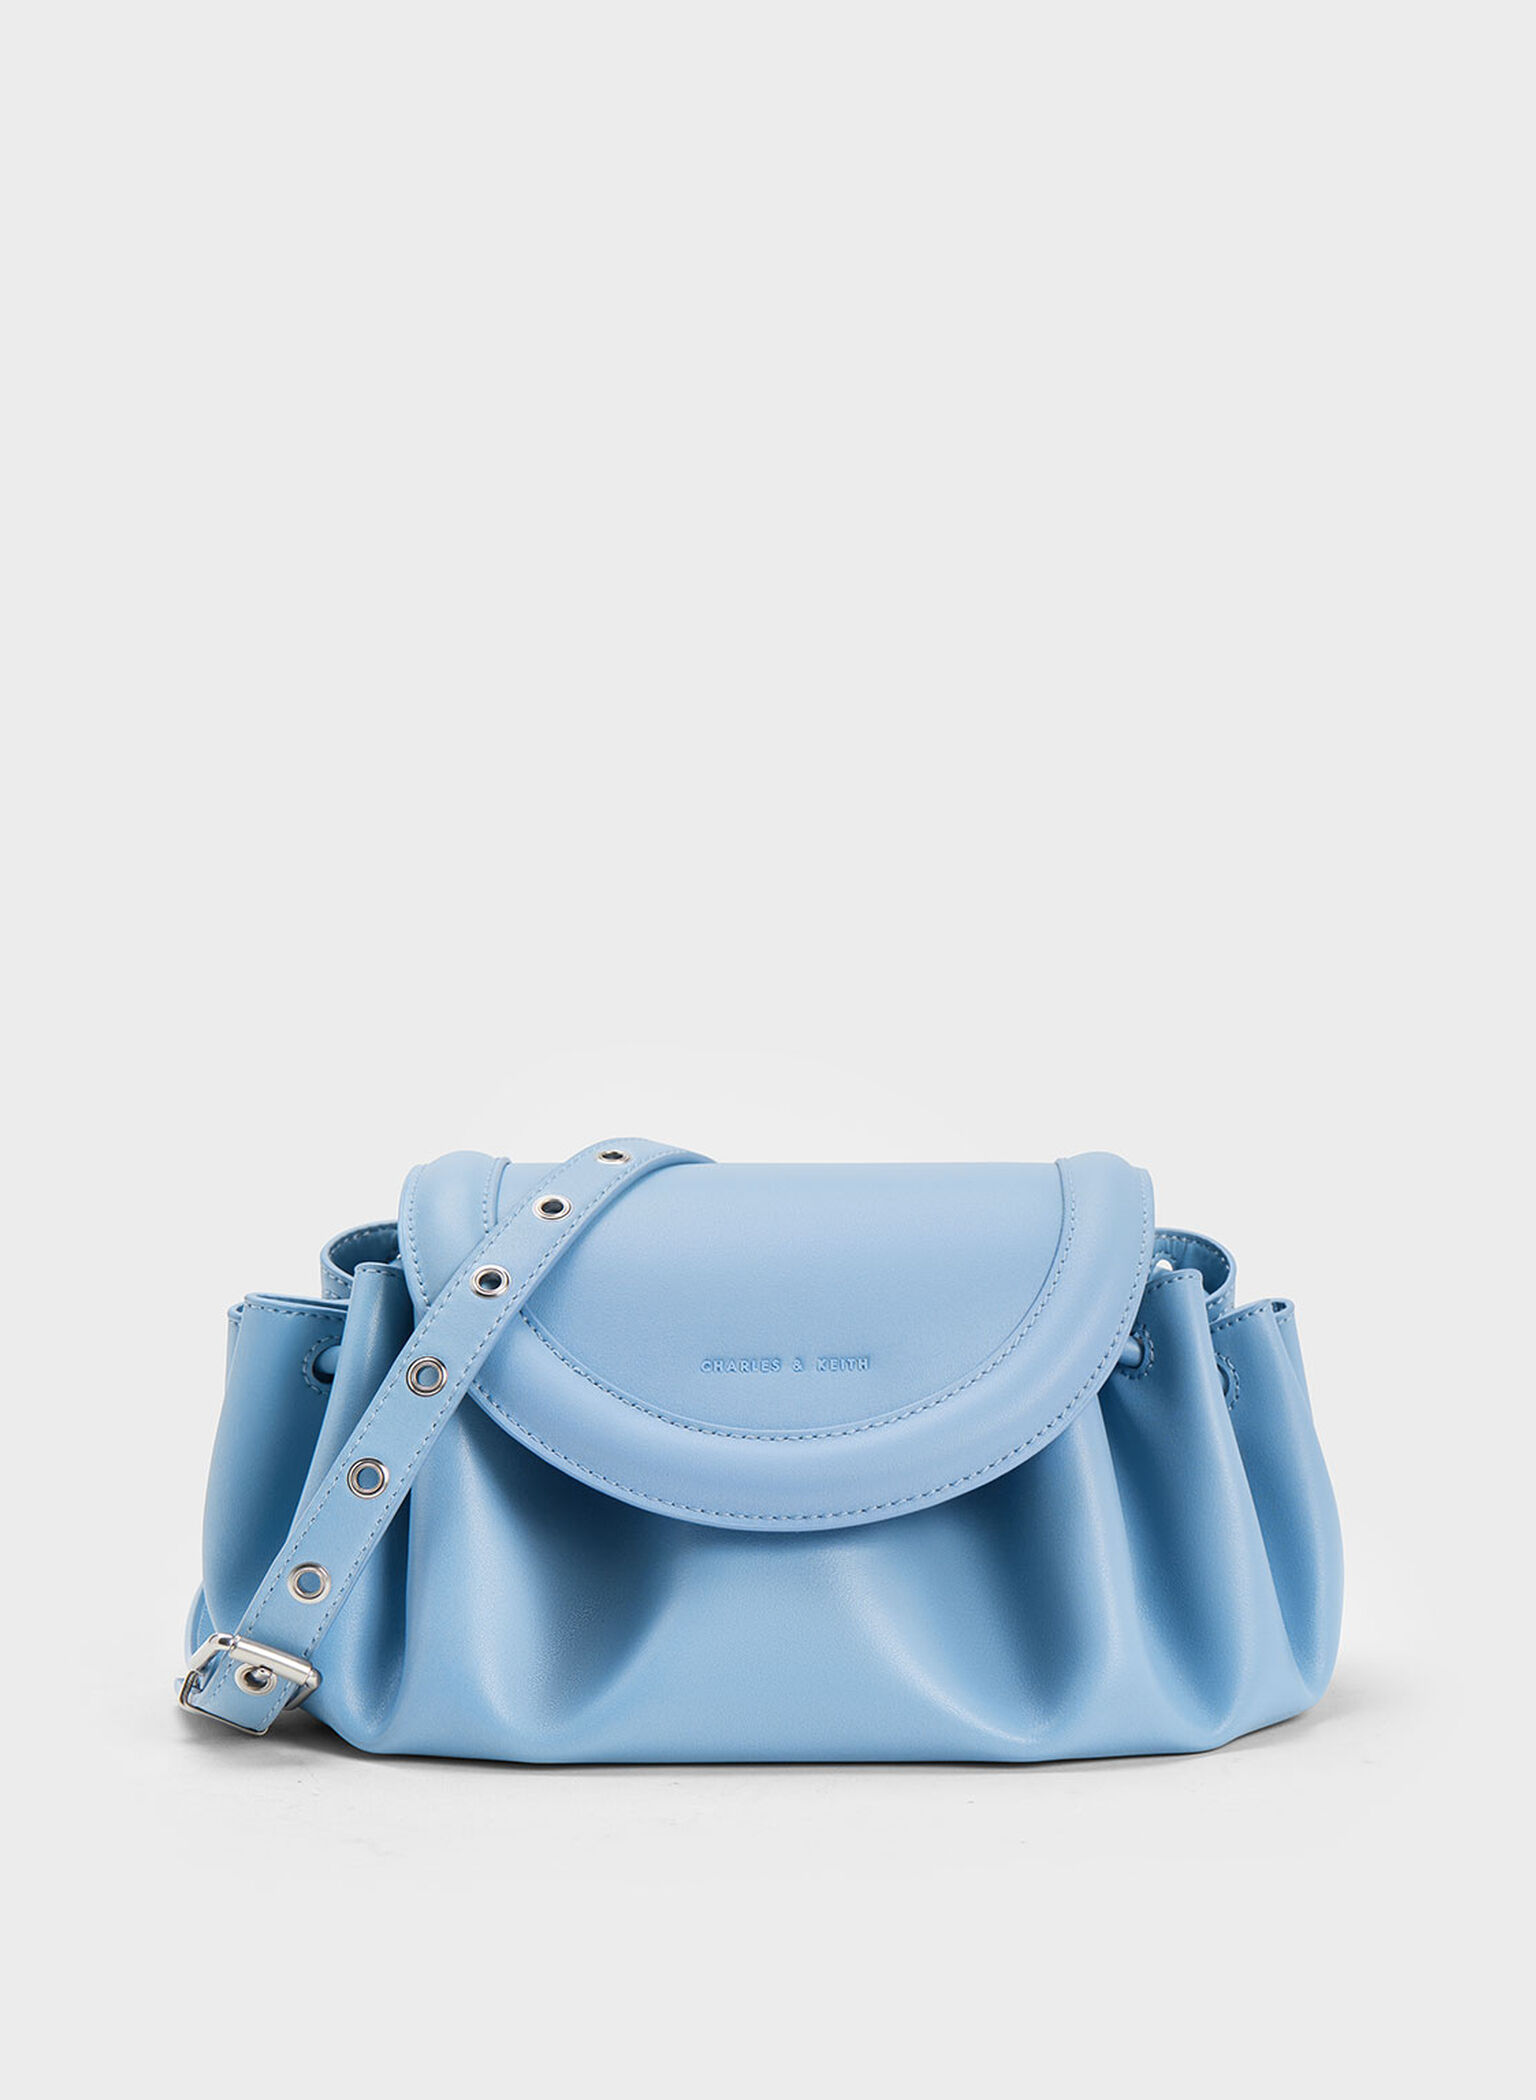 Charles & Keith - Women's Blossom Curved Flap Crossbody Bag, Light Blue, M